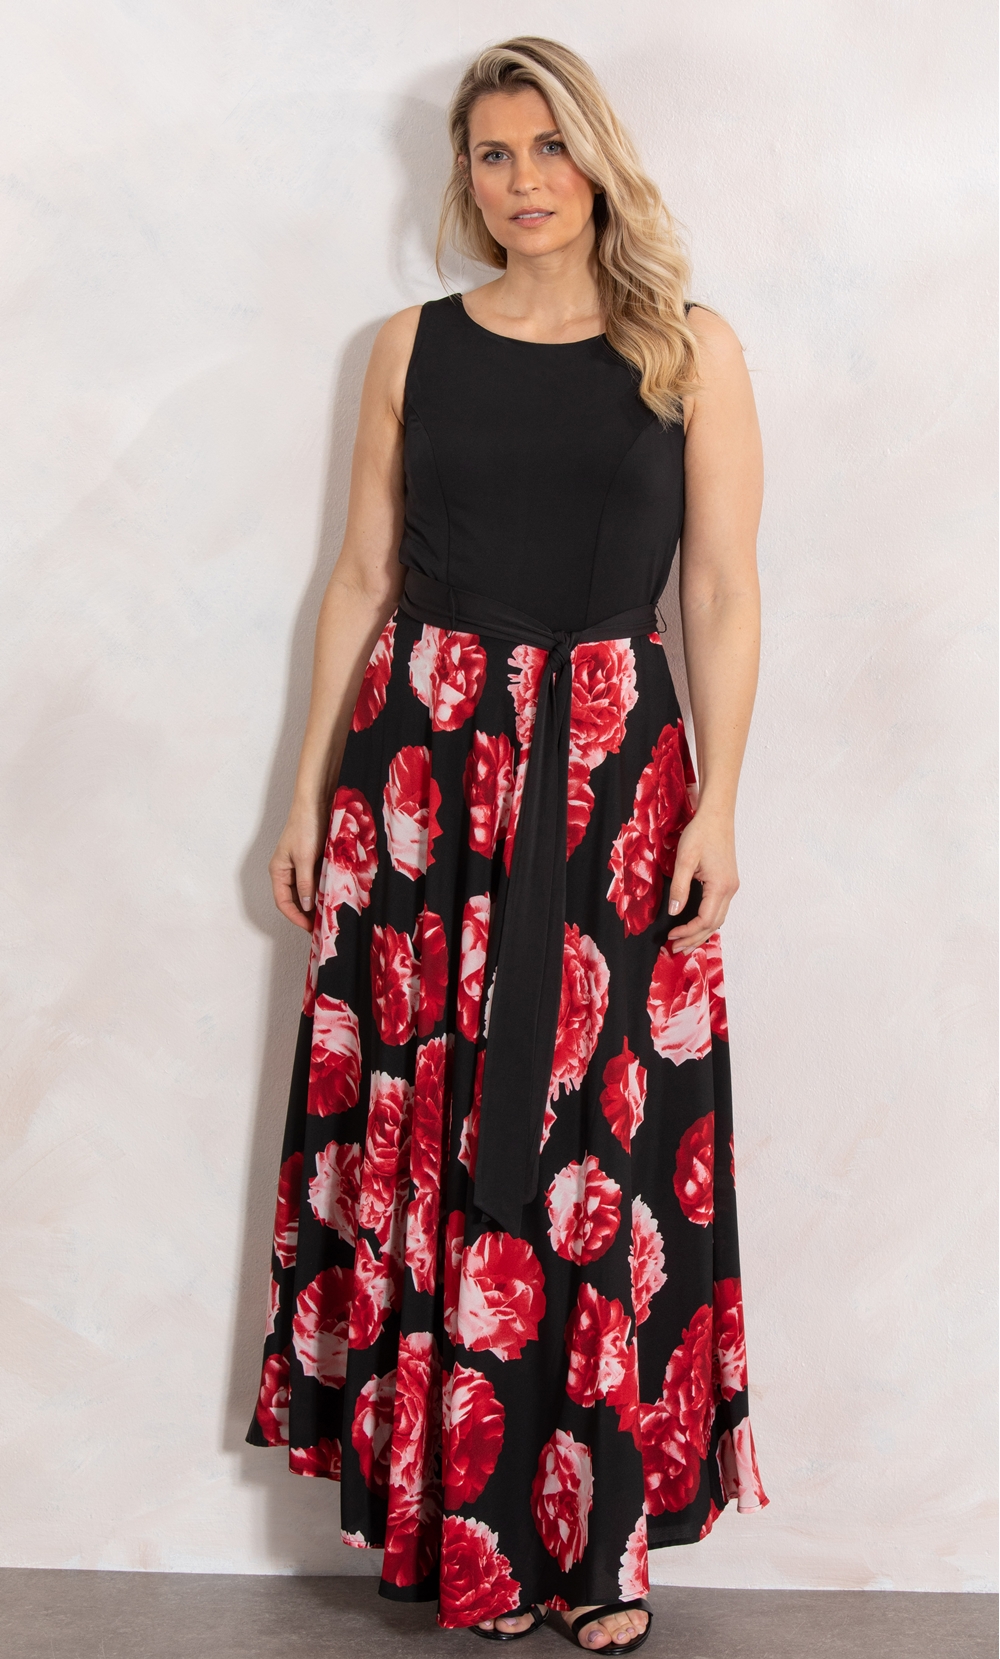 Brands - Klass Floral Print Sleeveless Maxi Dress Black/Red Women’s